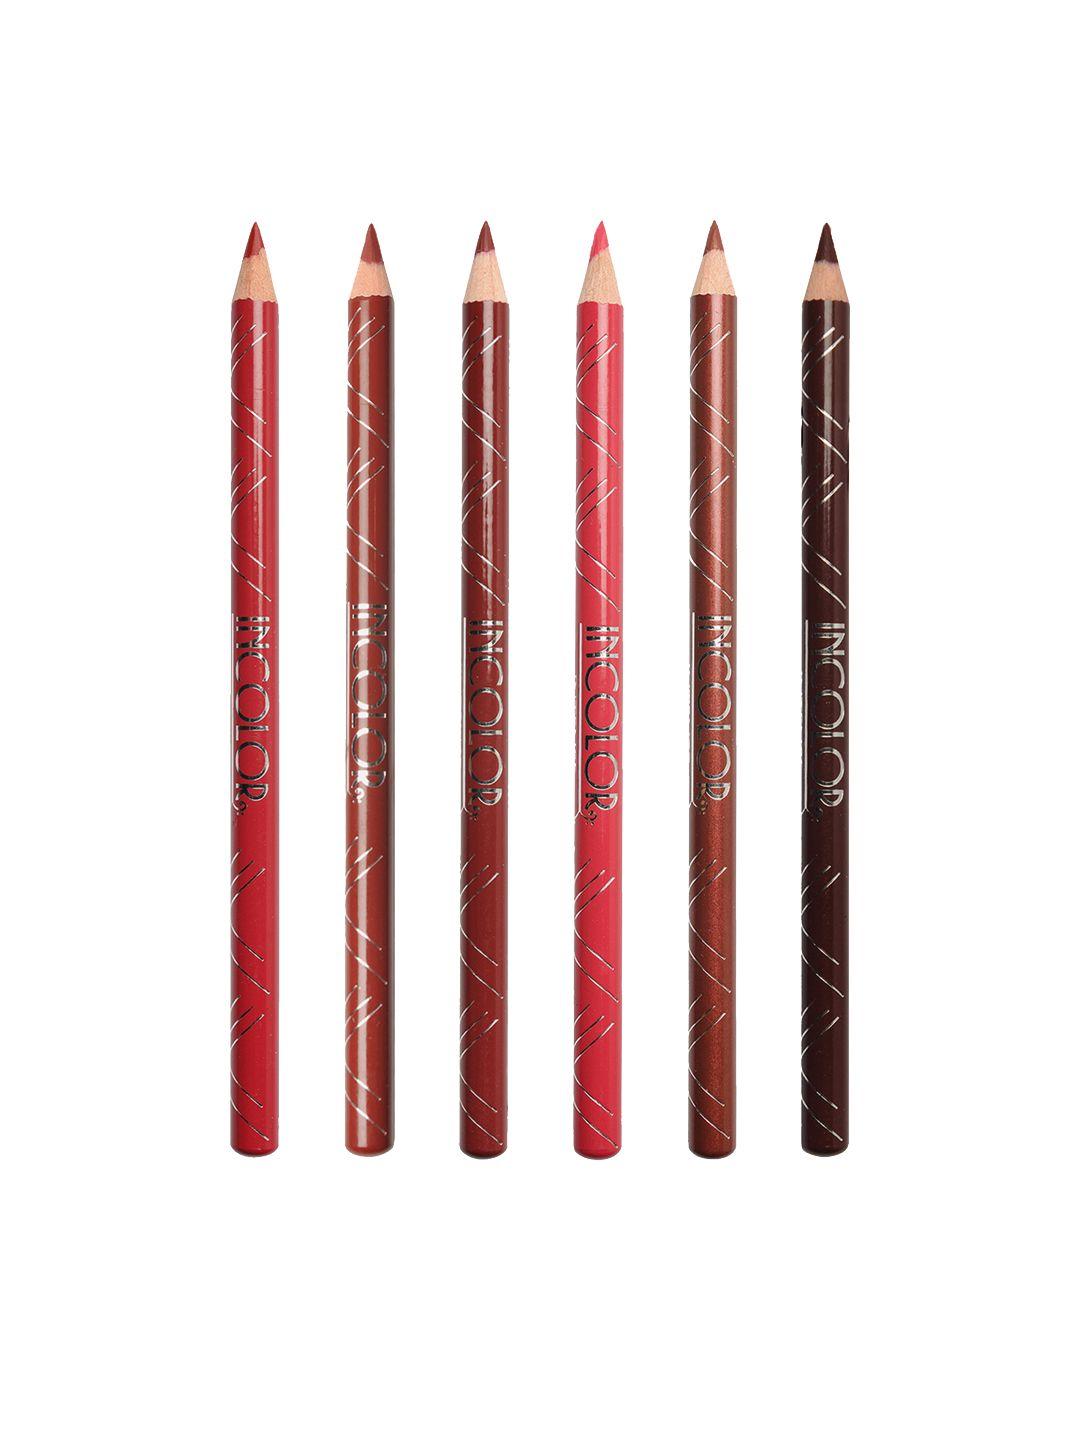 incolor pack of 6 intense longwear lip pencil 1.8 g each